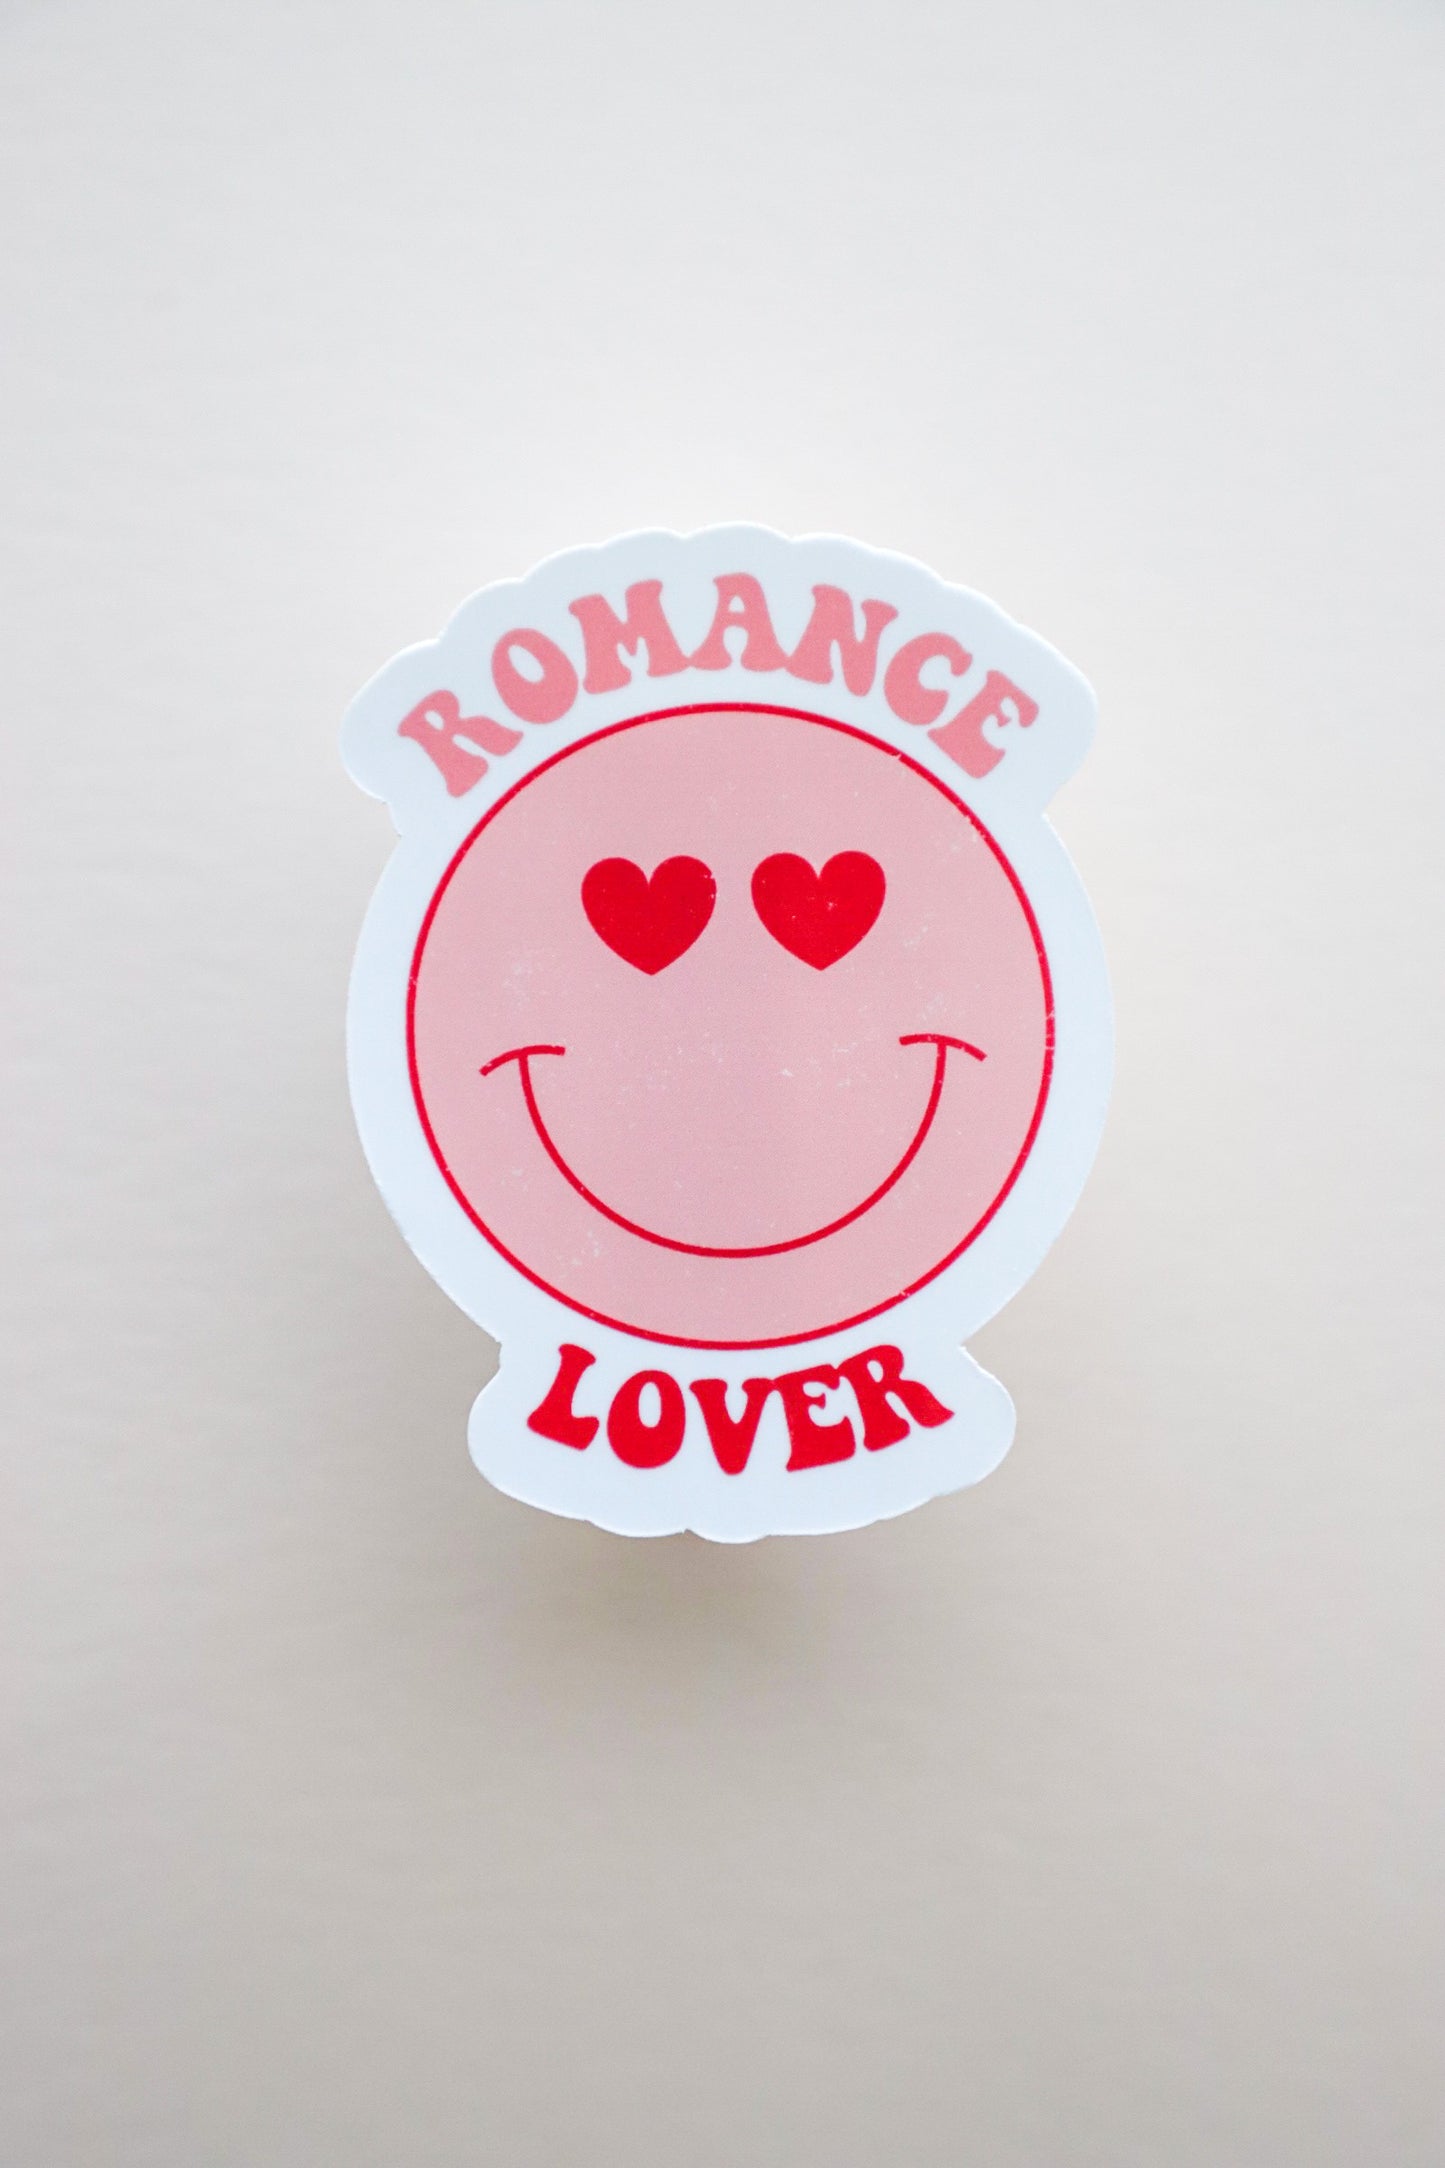 Romance Lover Sticker